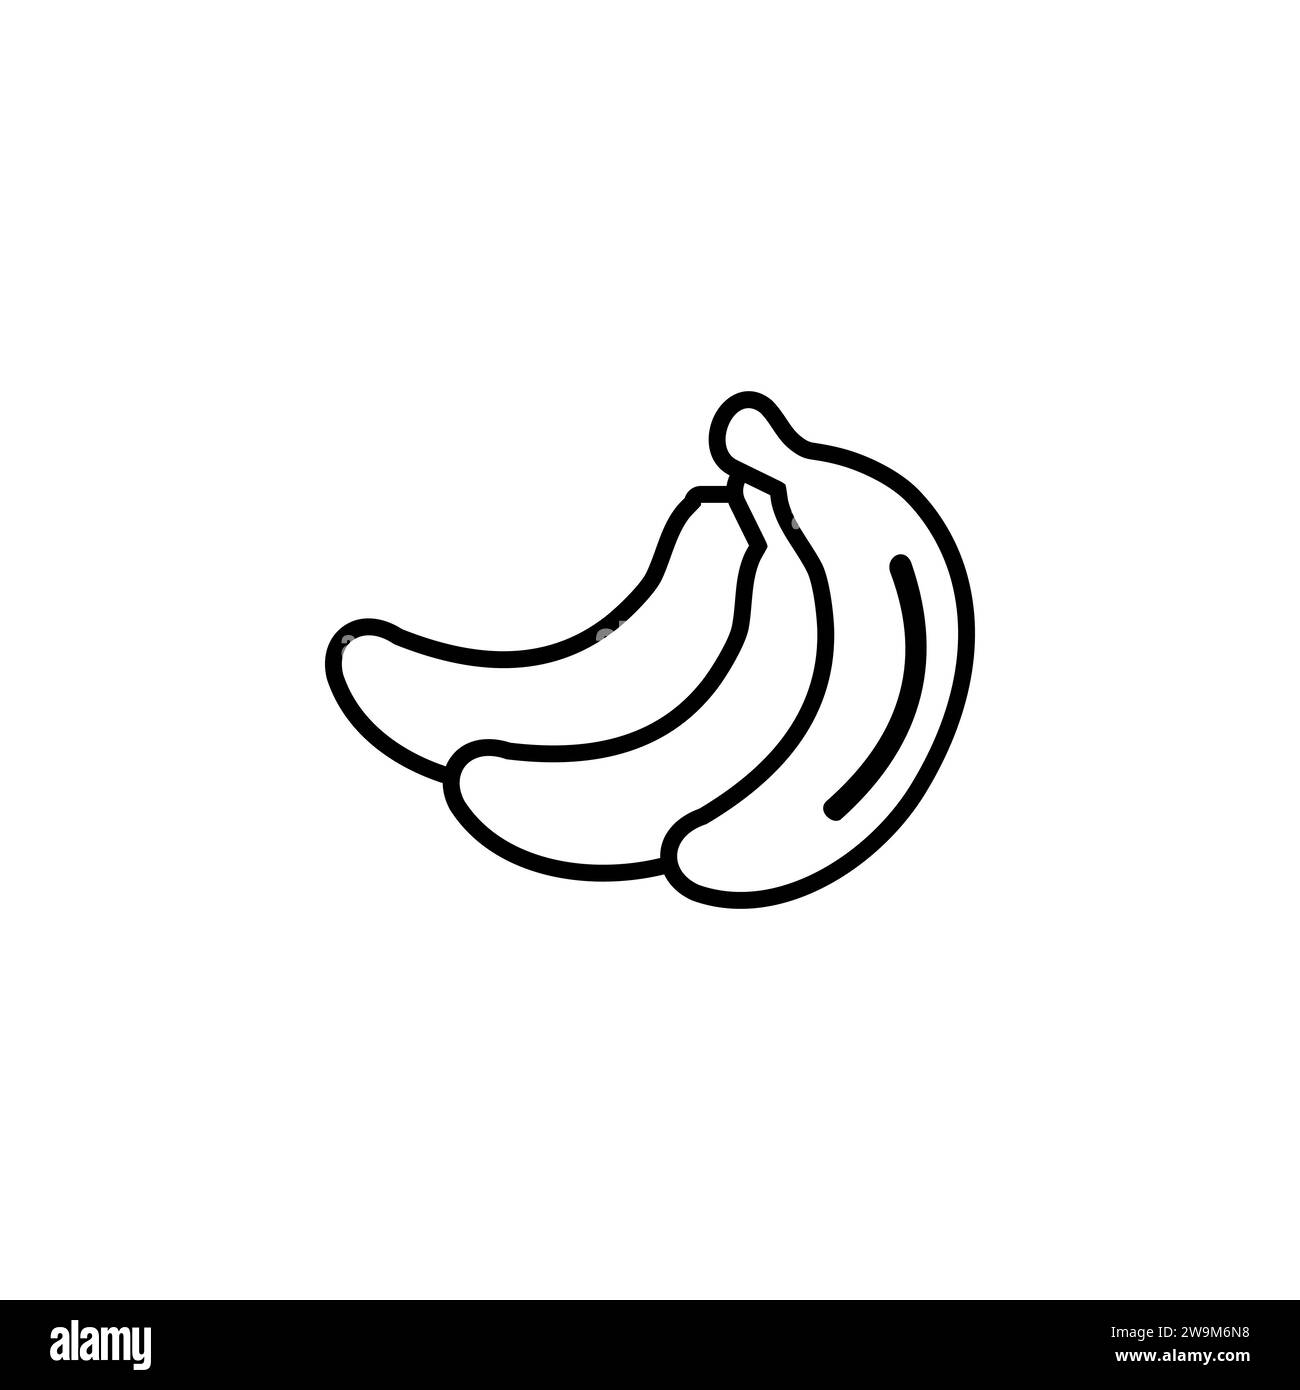 banana icon vector isolated on white background. banana icon Stock Vector